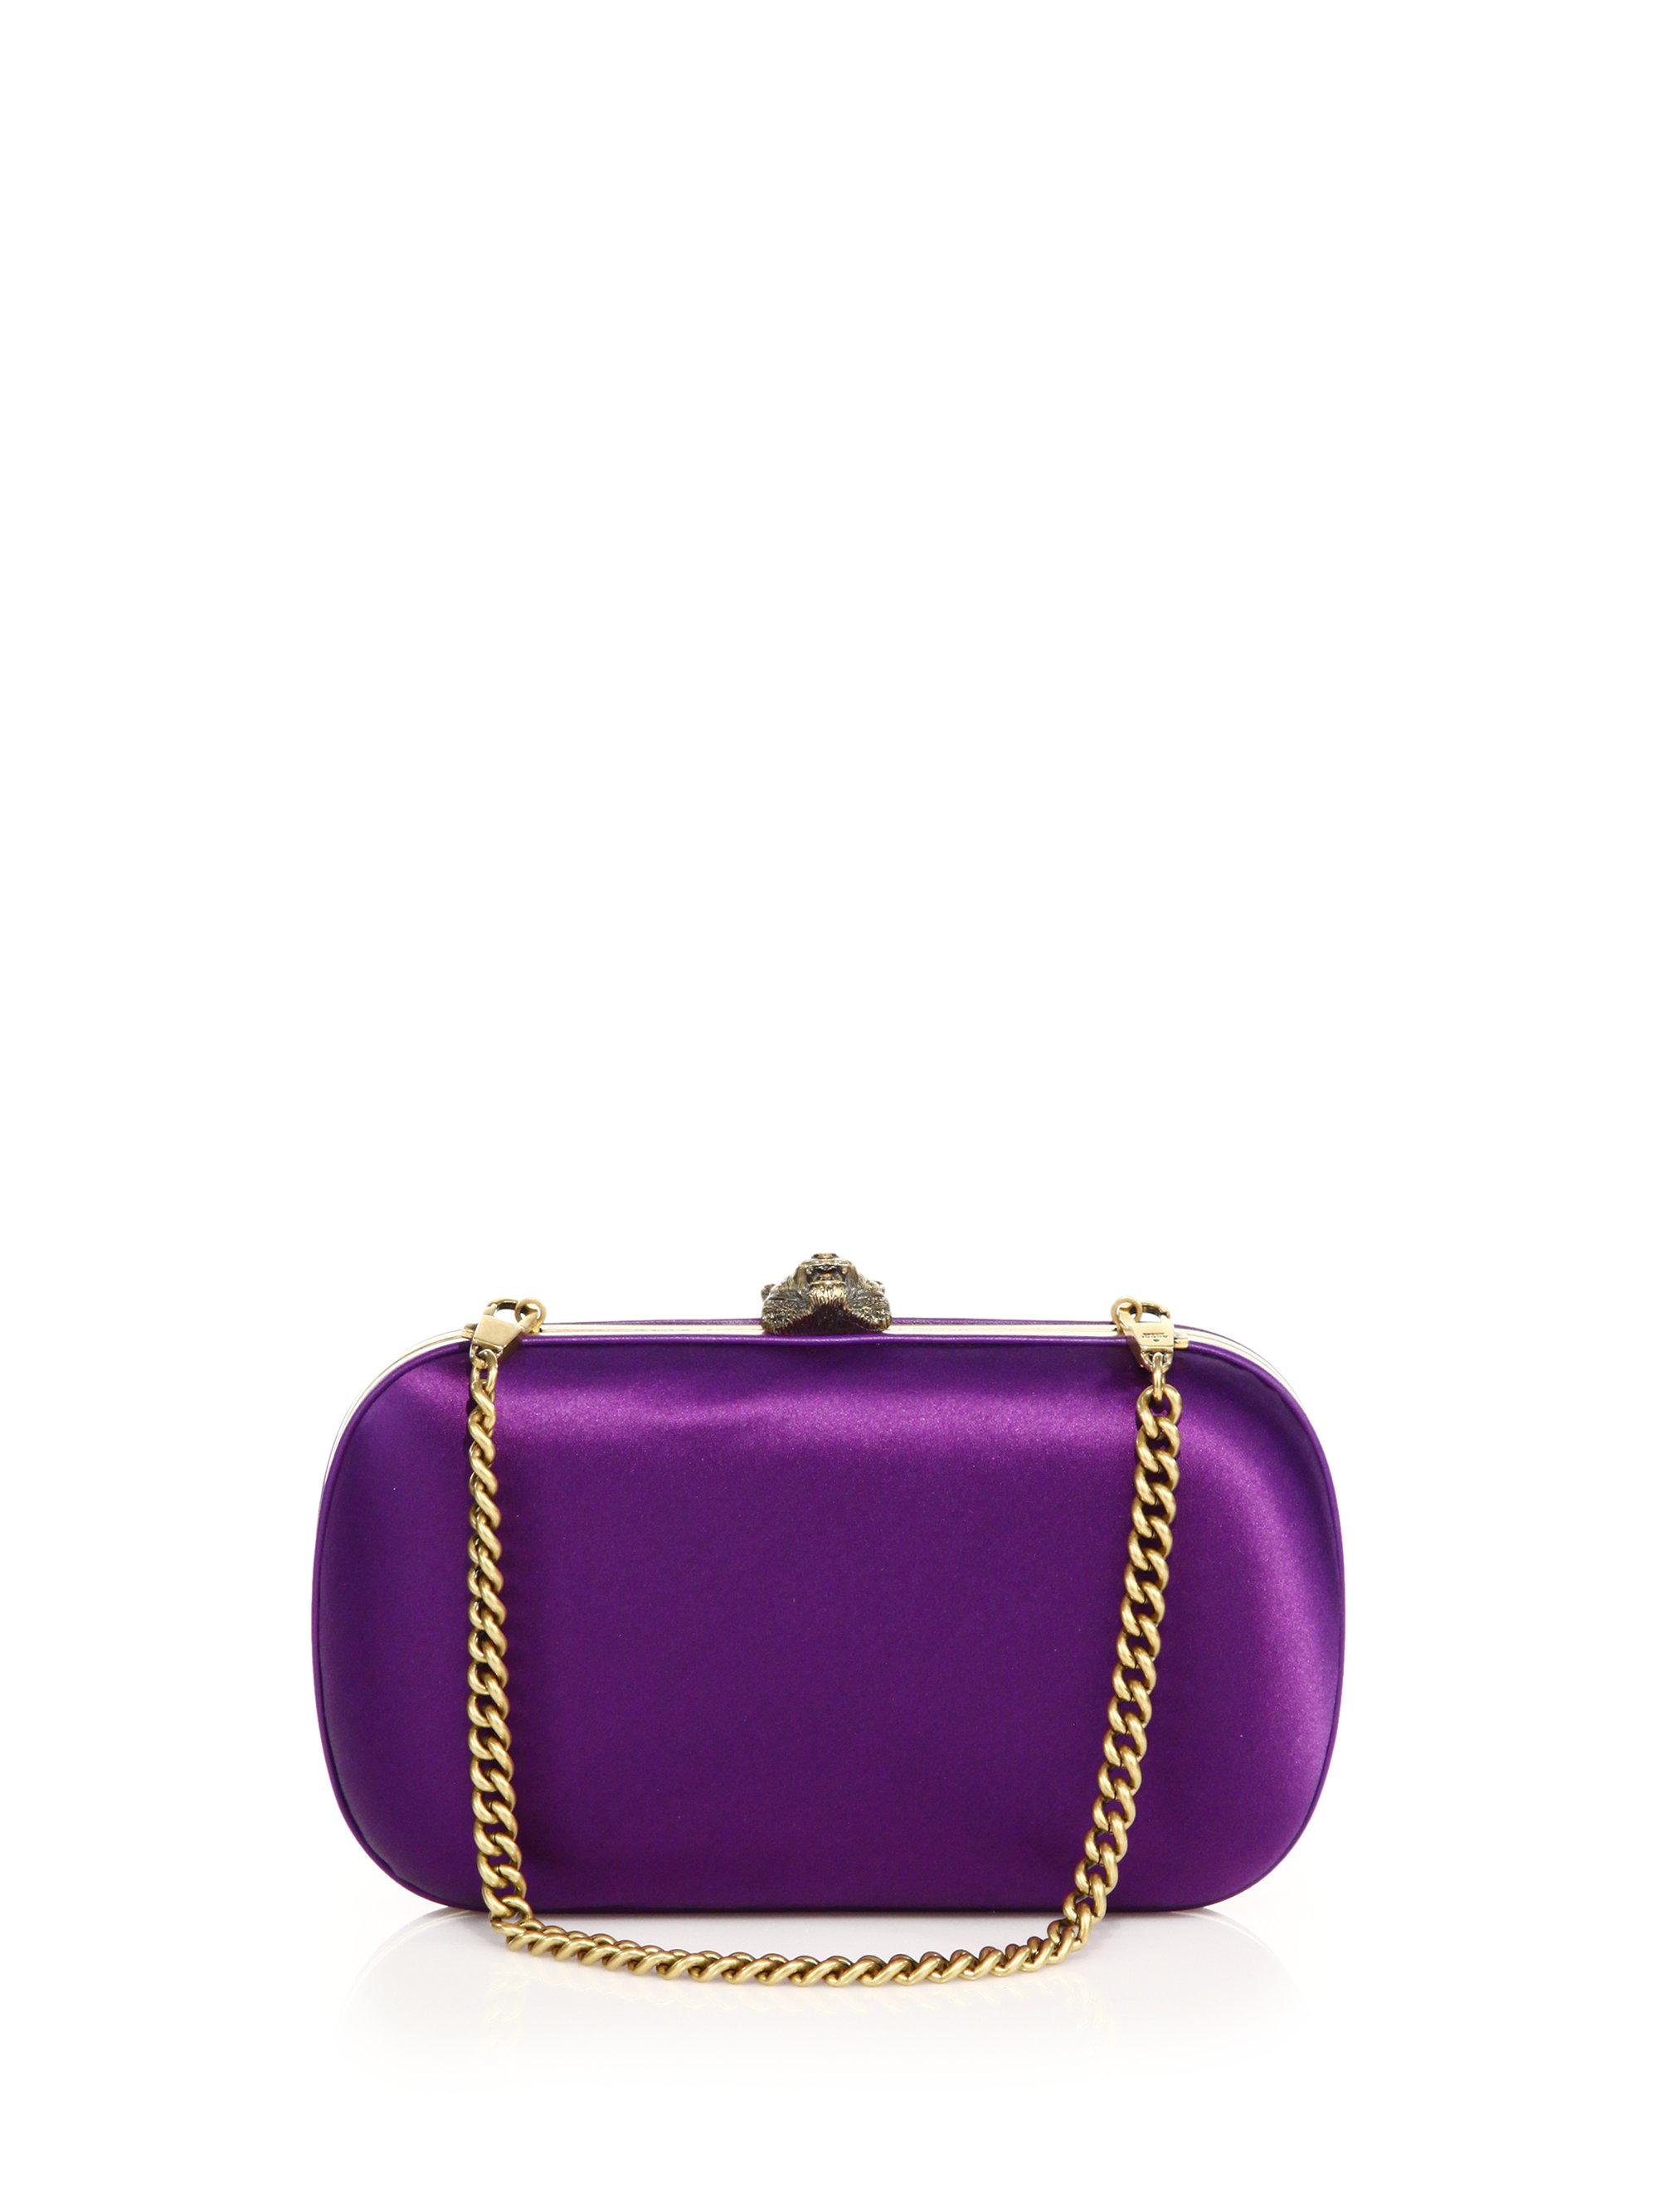 Gucci Leather Broadway Satin Clutch Bag in Purple - Lyst